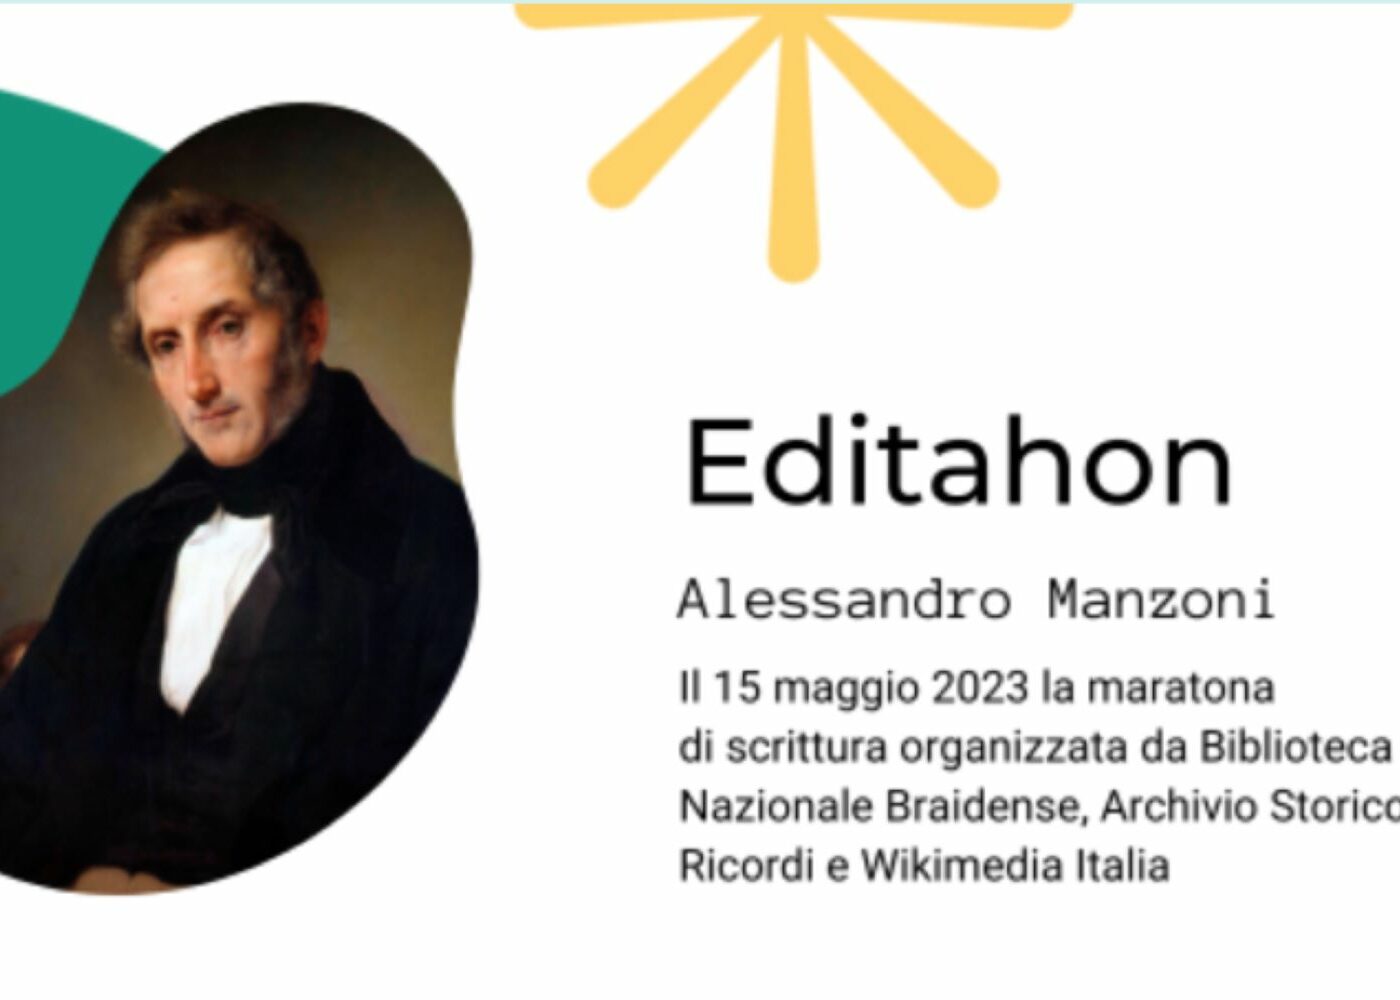 Alessandro Manzoni. Editathon 150 anni dopo